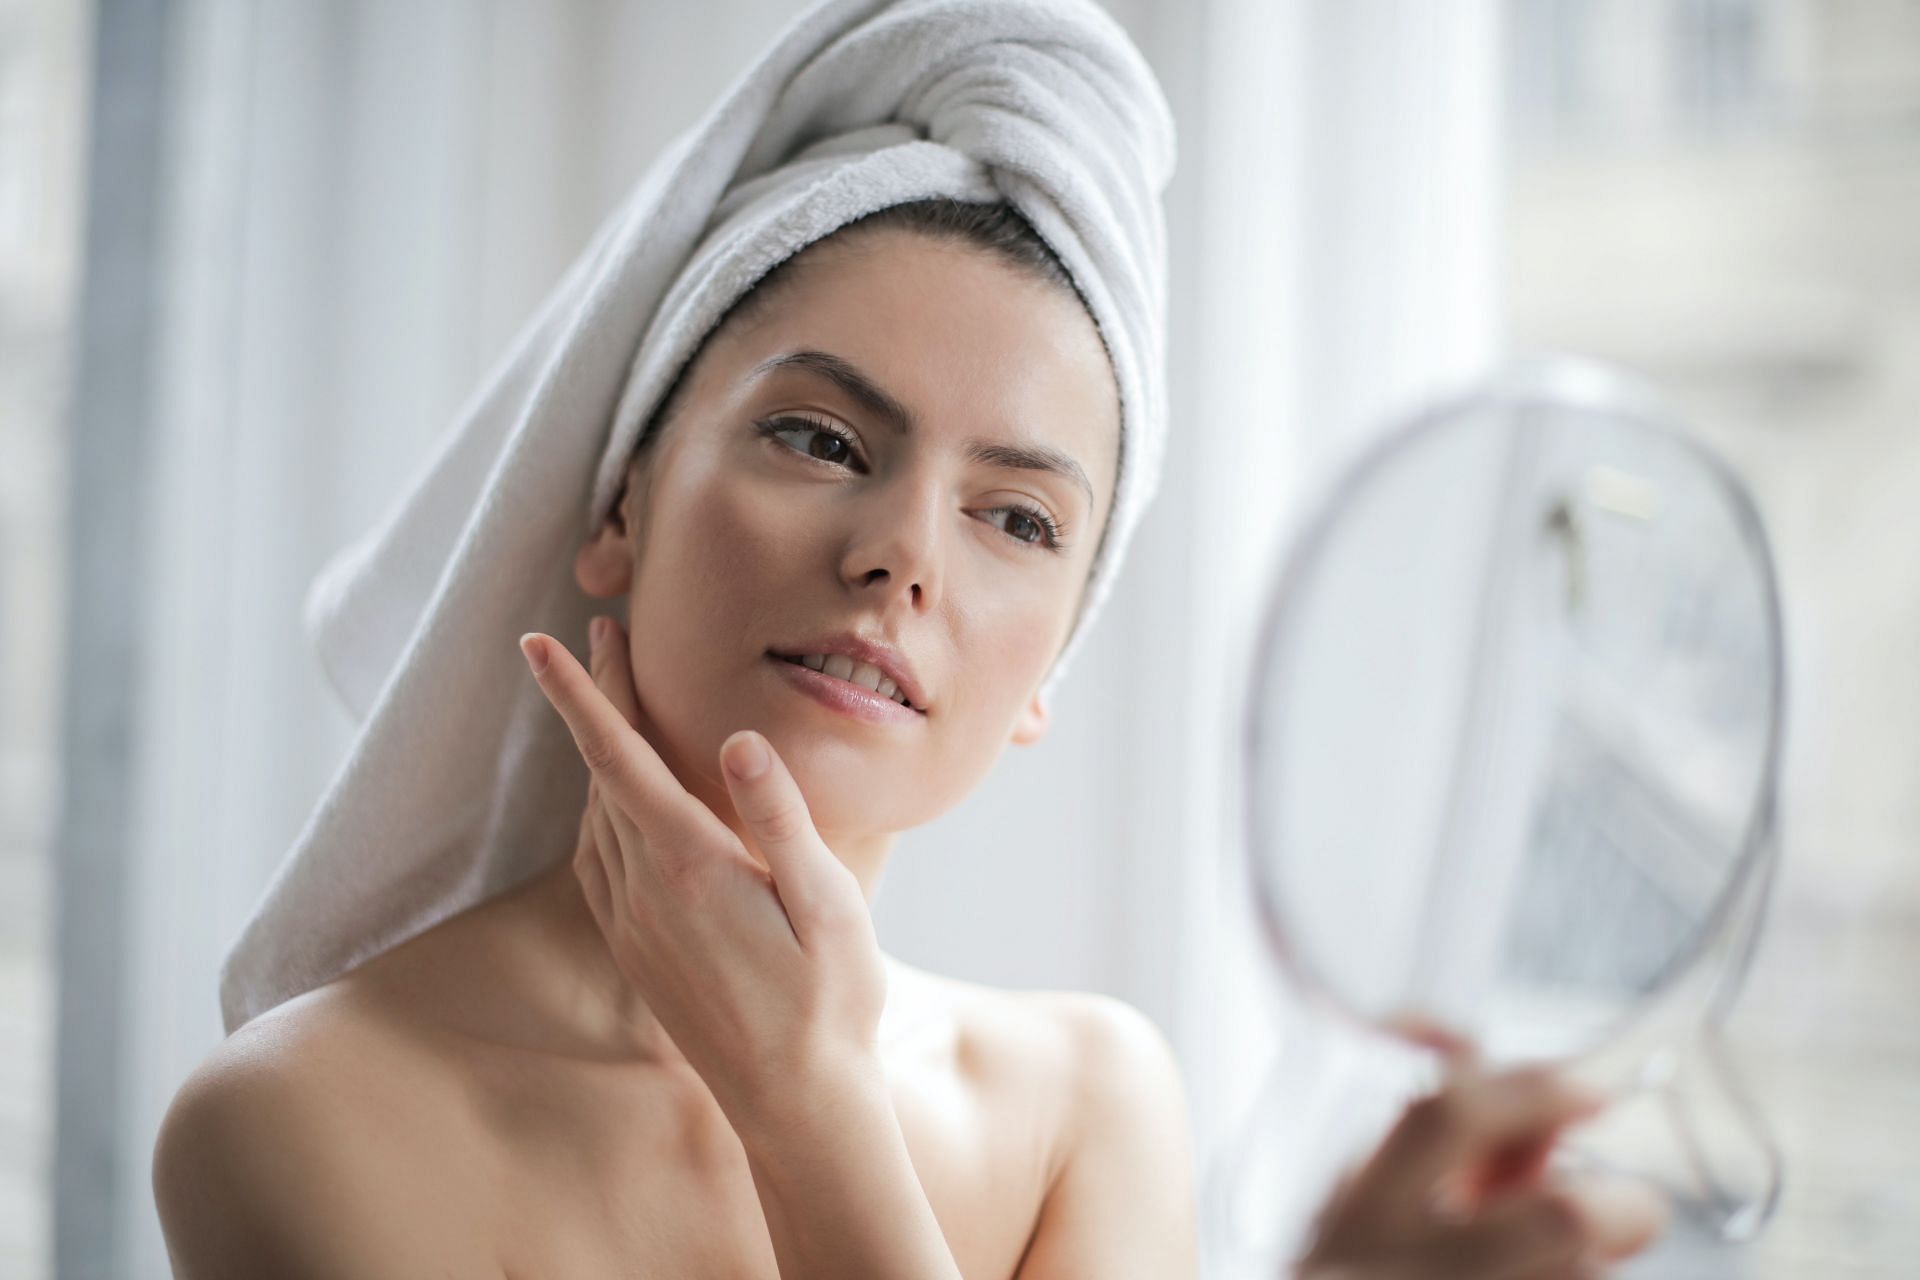 Skin care tips to try! (Image via Pexels/Andrea Piacquadio)